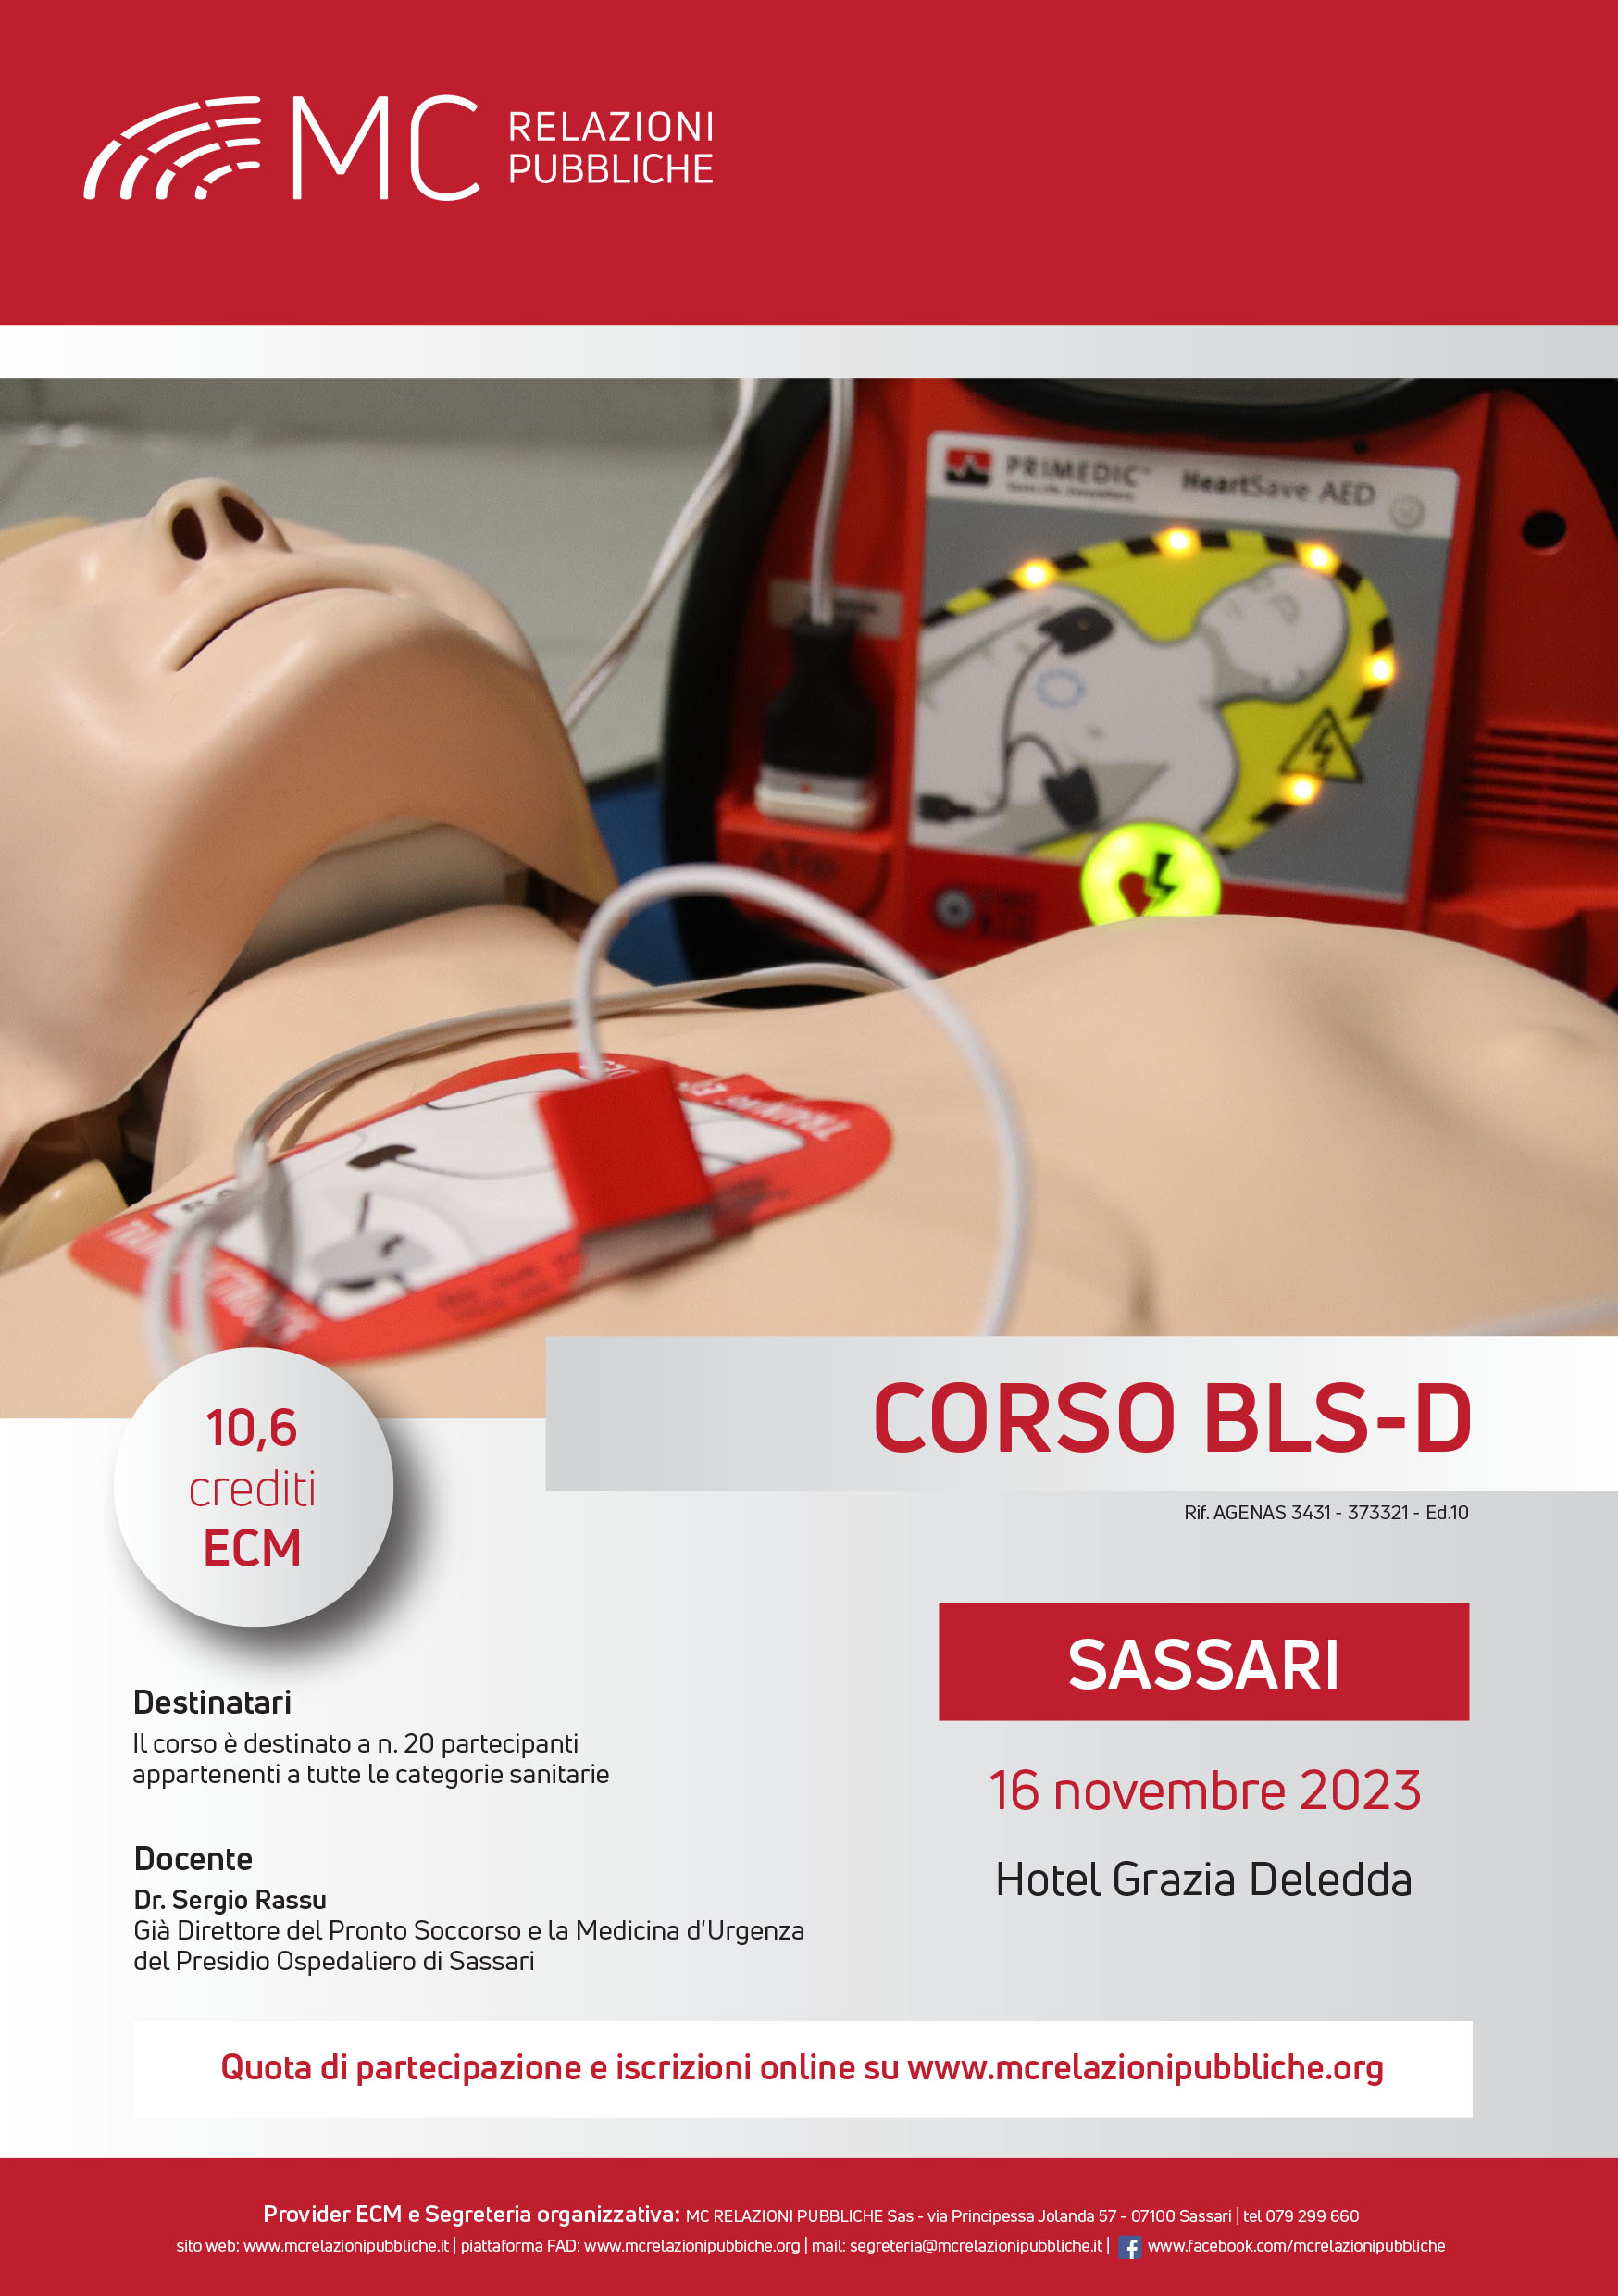 Corso BLS-D. Basic life support-defibrillation ed.10